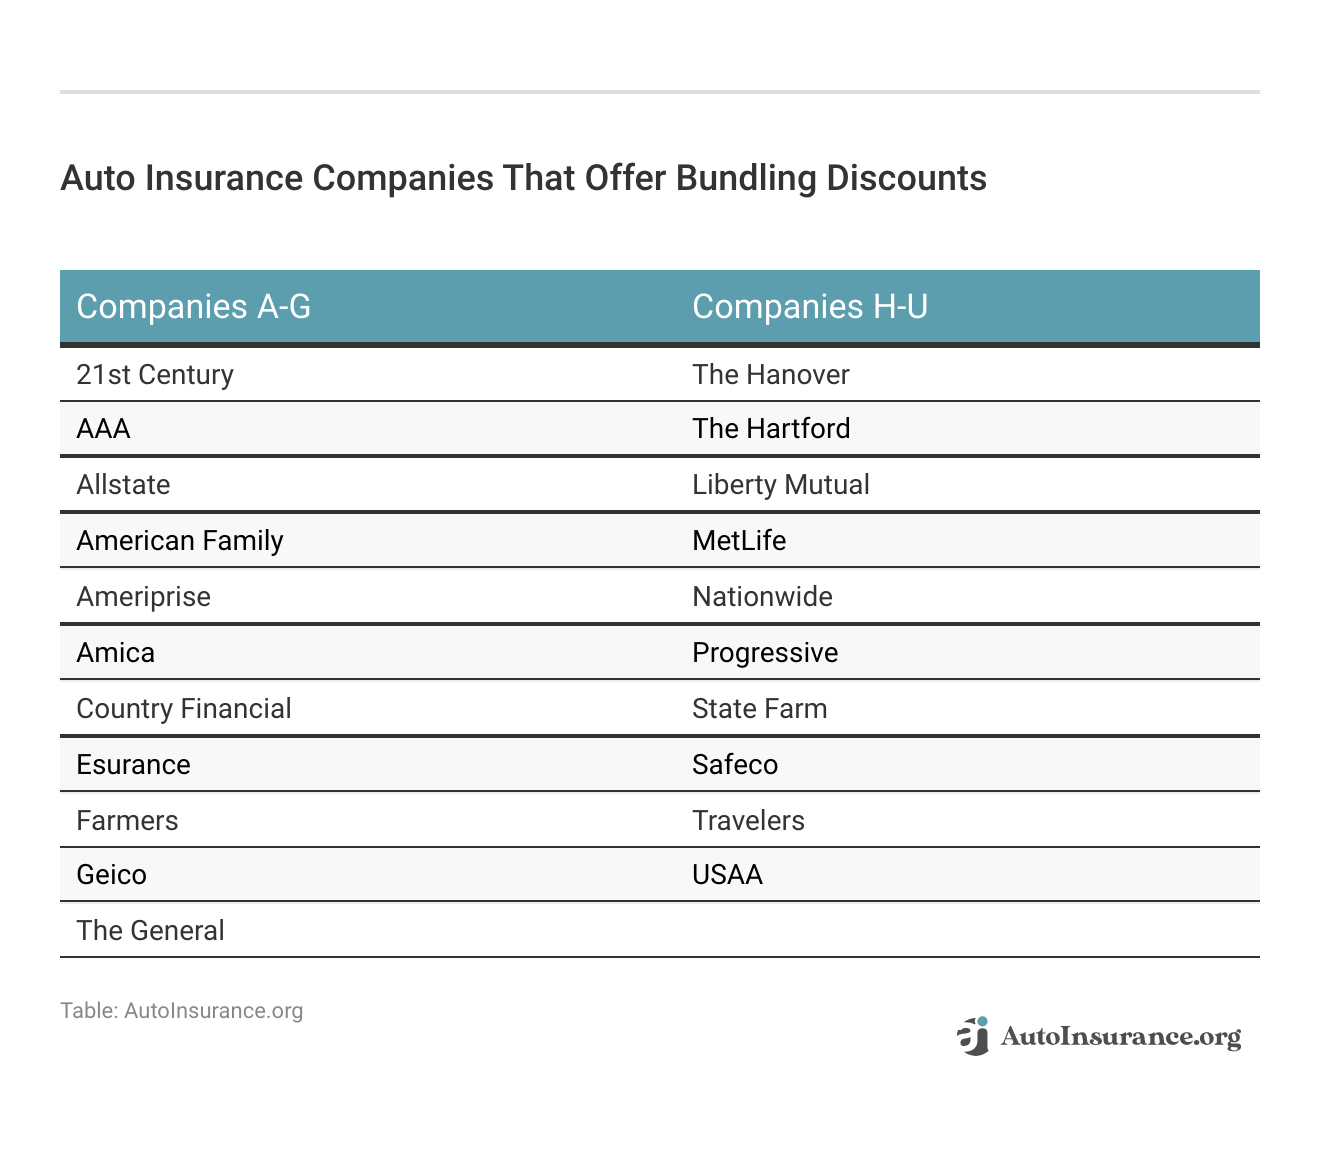 <h3>Auto Insurance Companies That Offer Bundling Discounts</h3>